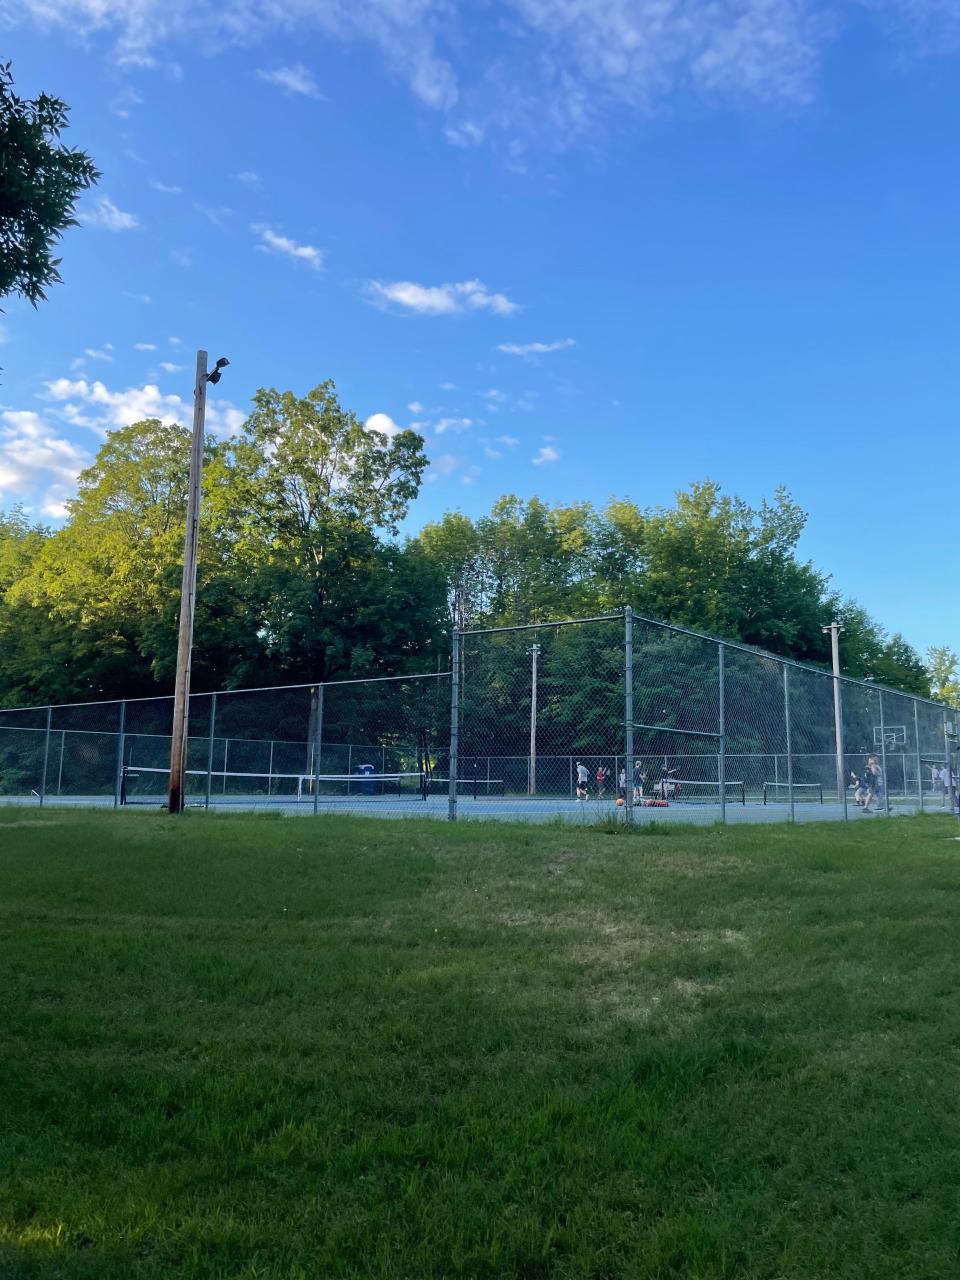 Players enjoying Szymanski Park's pickleball courts.